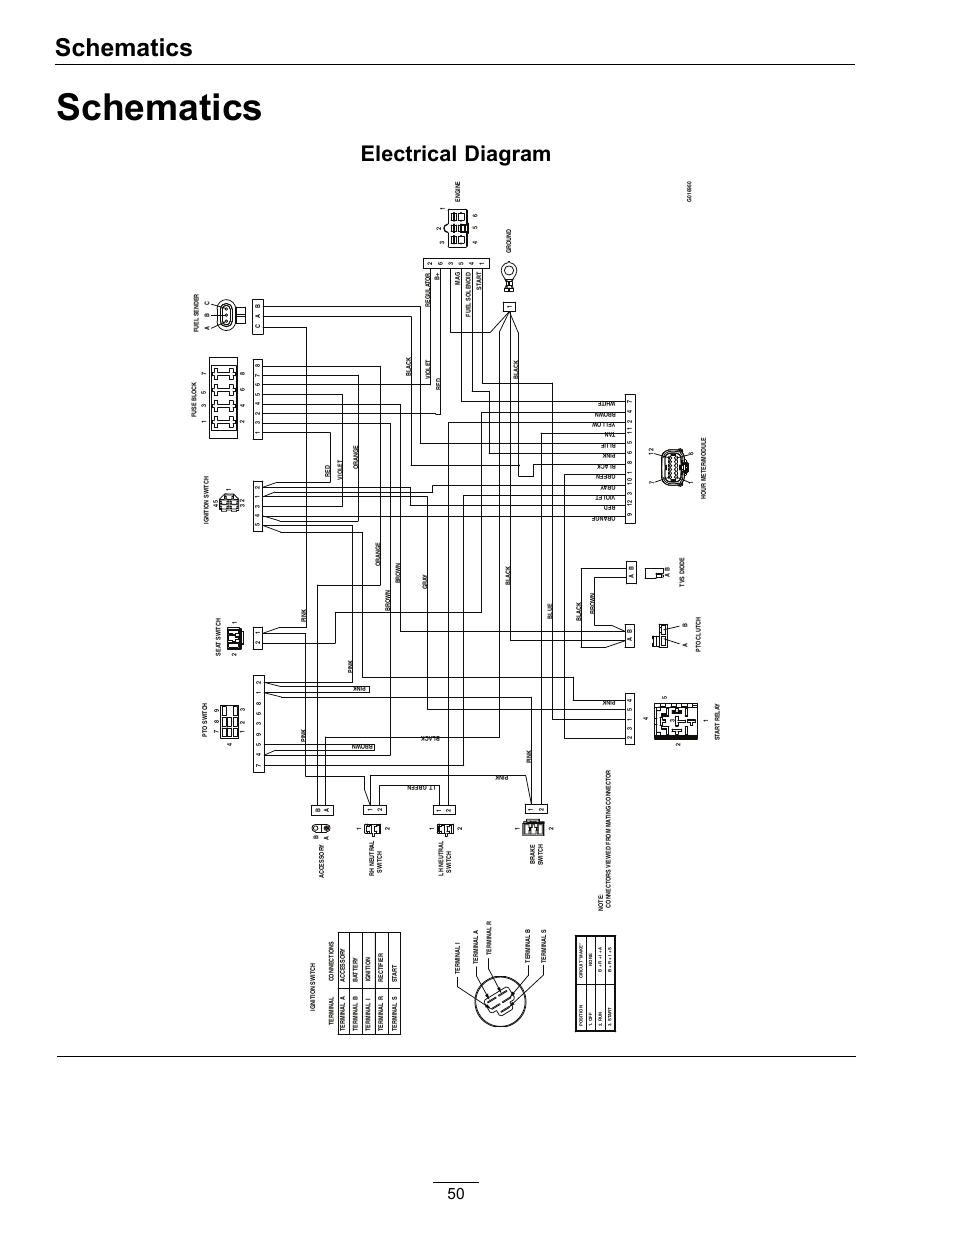 motorguide 24 volt trolling motor wiring diagram